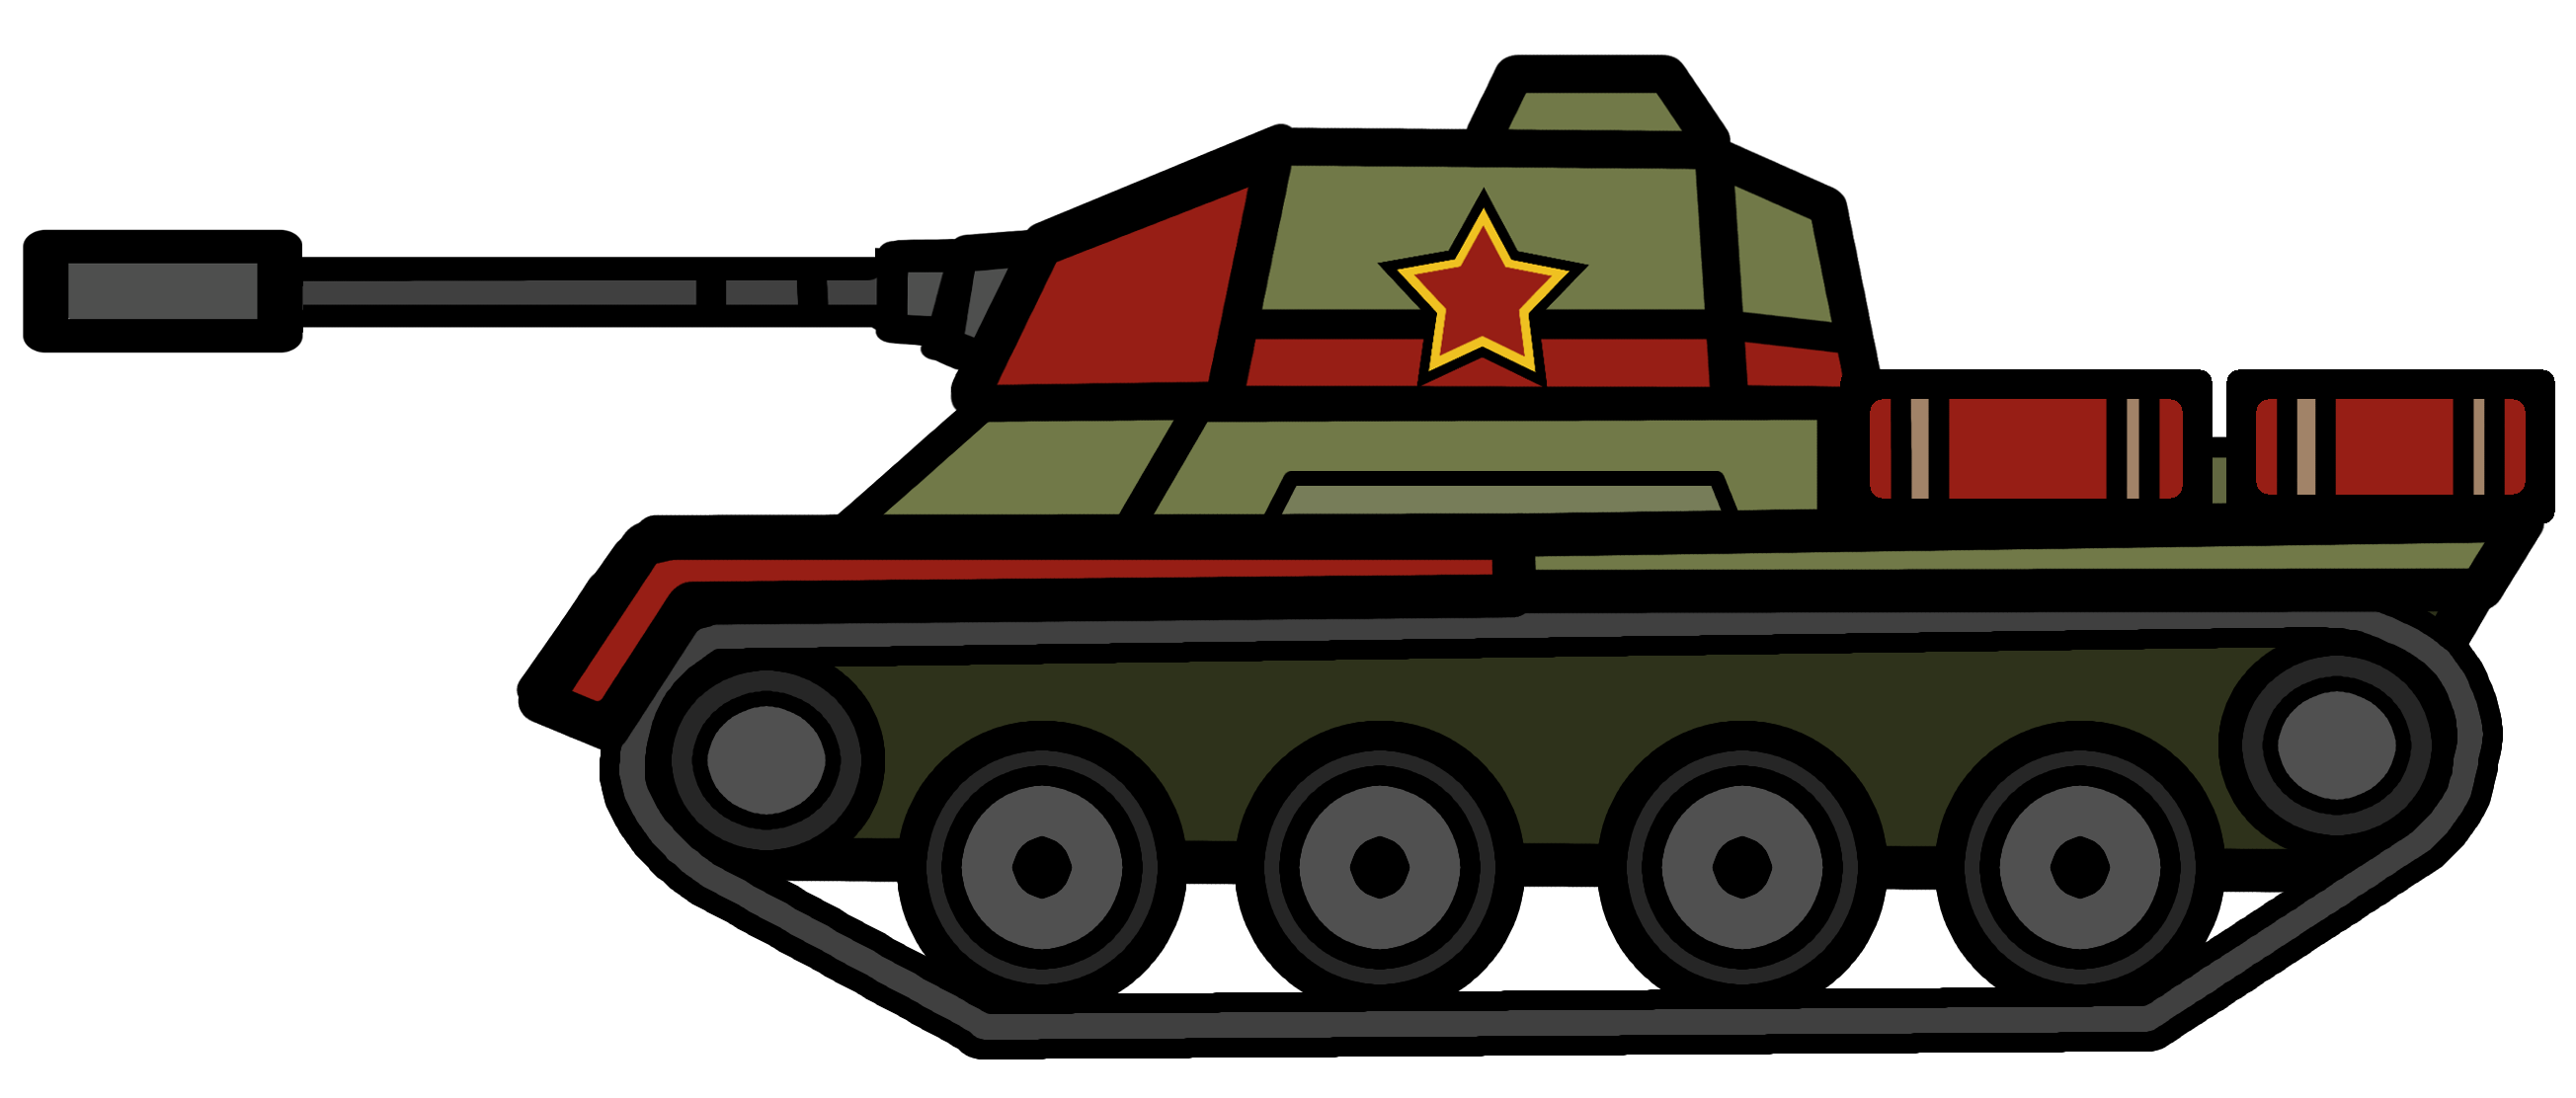 Walfas Custom: Soviet (Red Alert IOS) by on